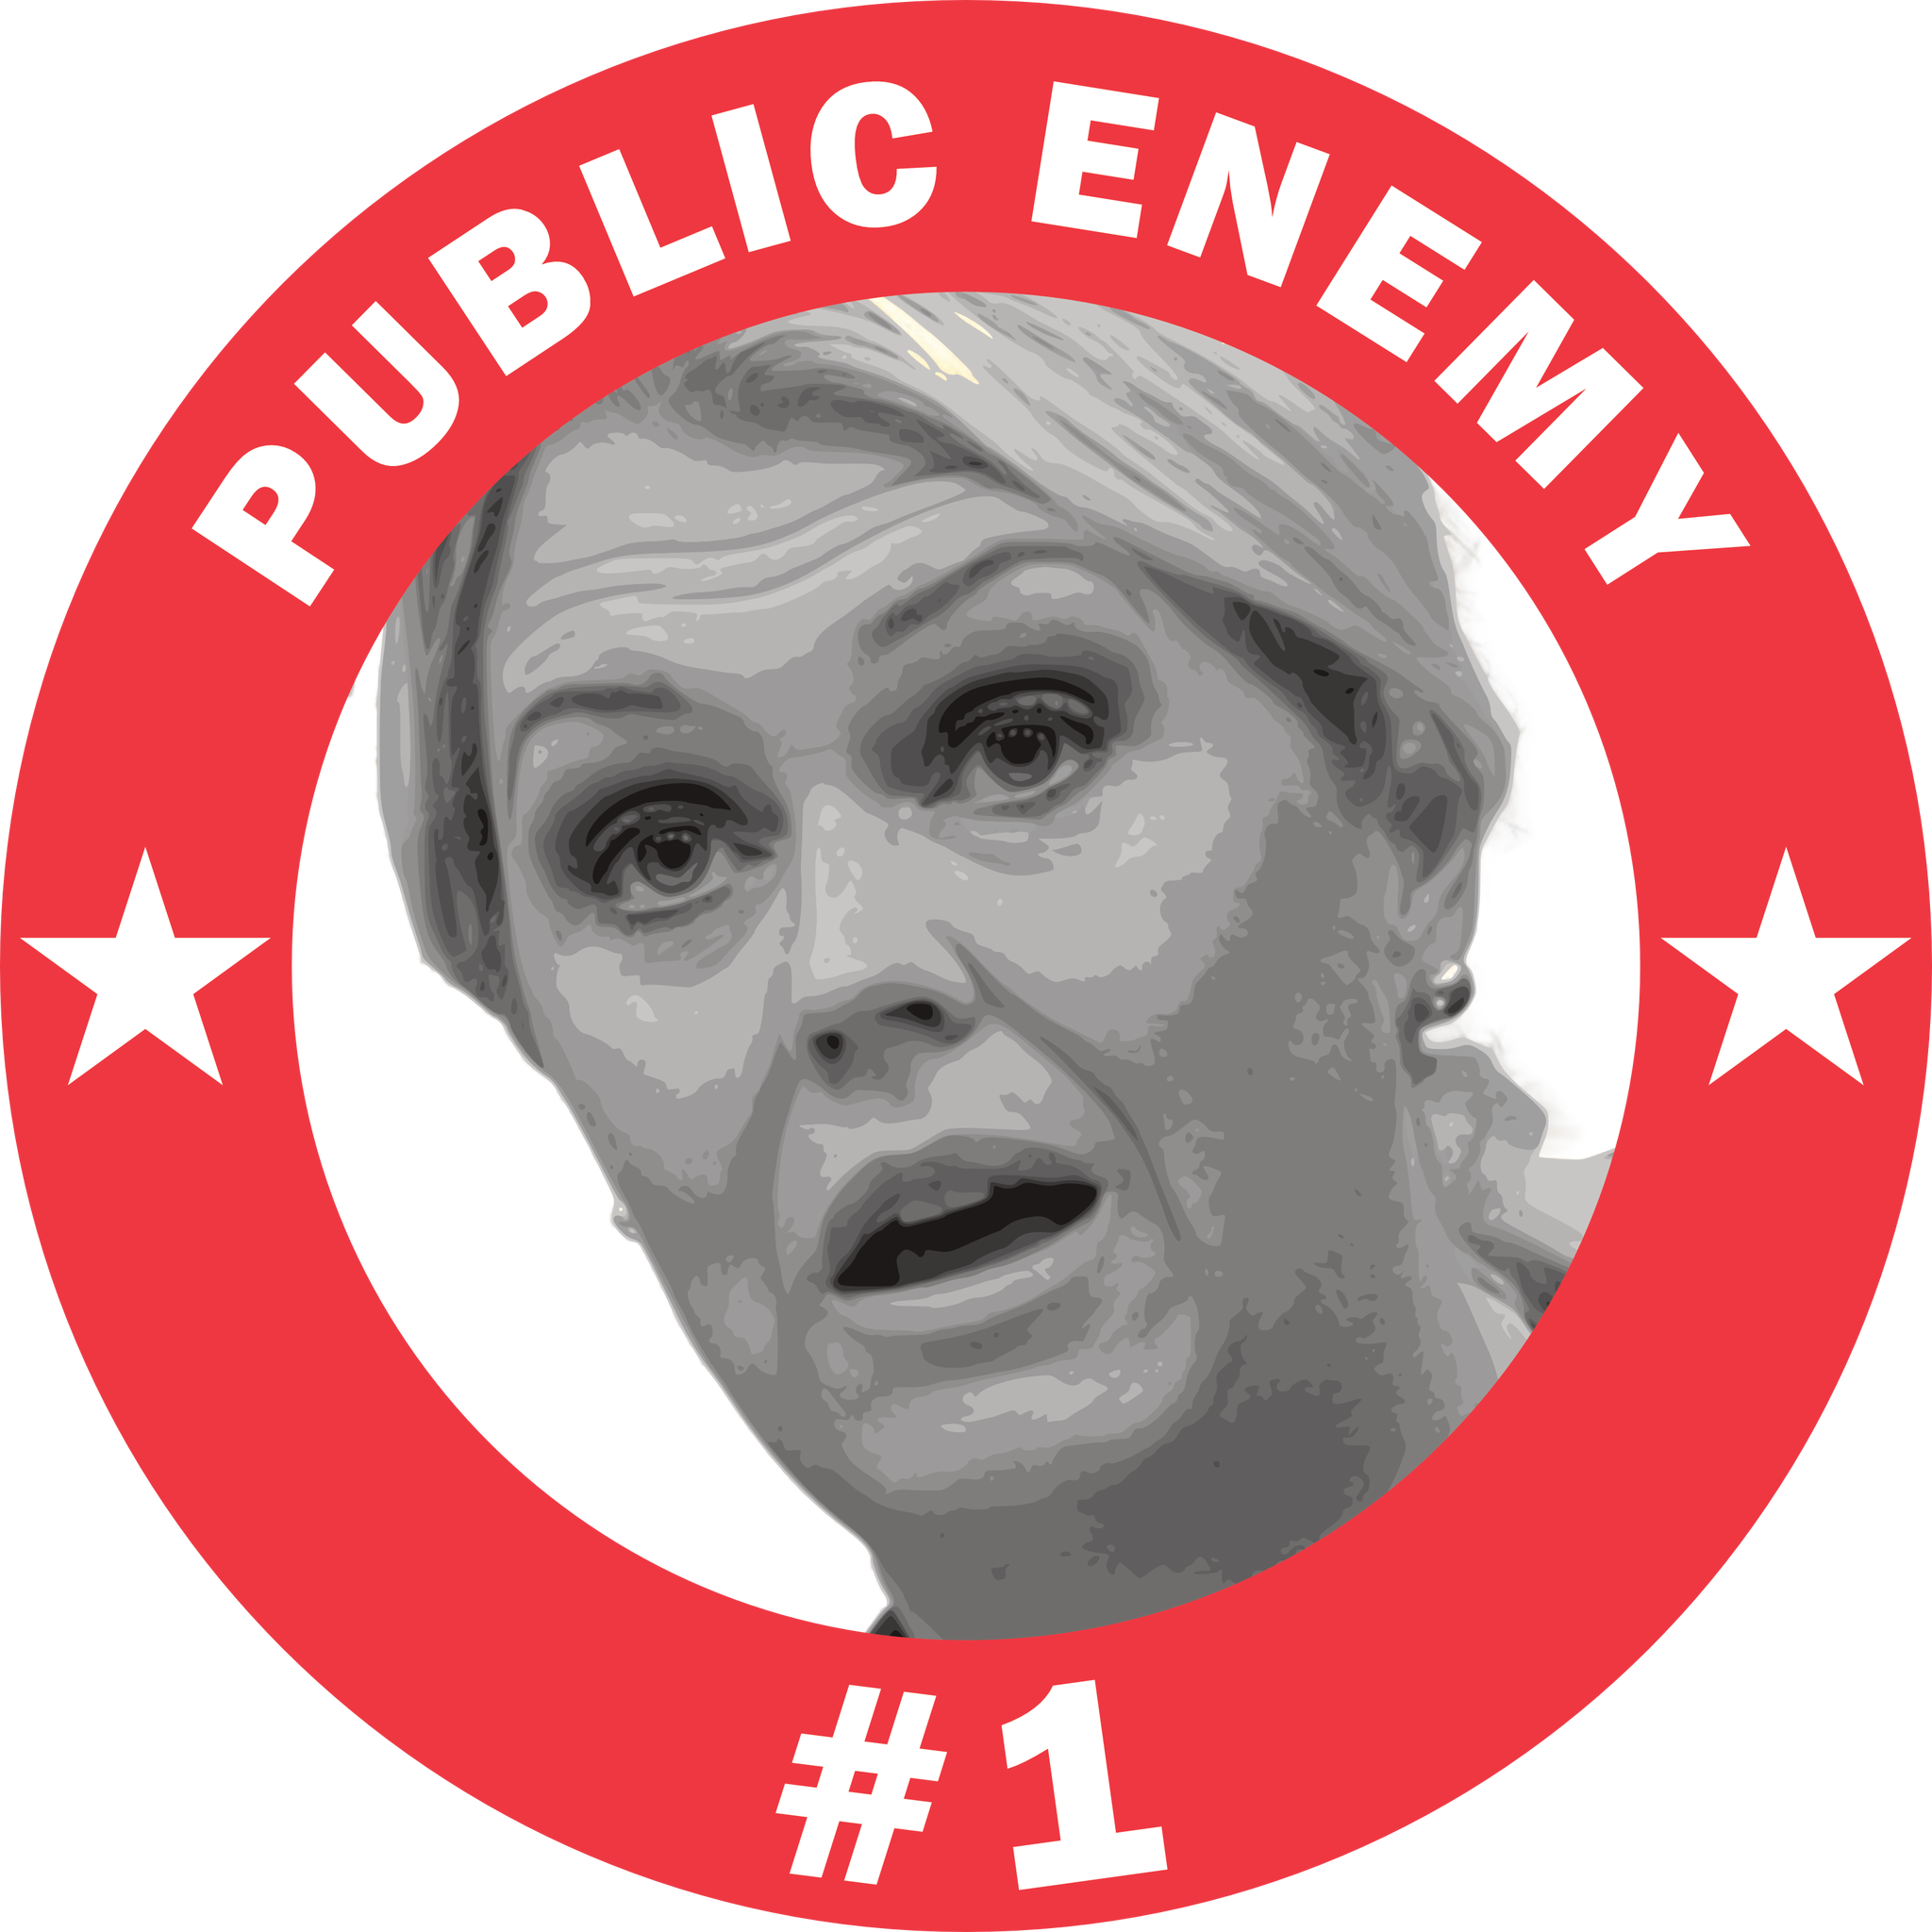 Lena Hallengren Public Enemy #1 T-Shirt Herr